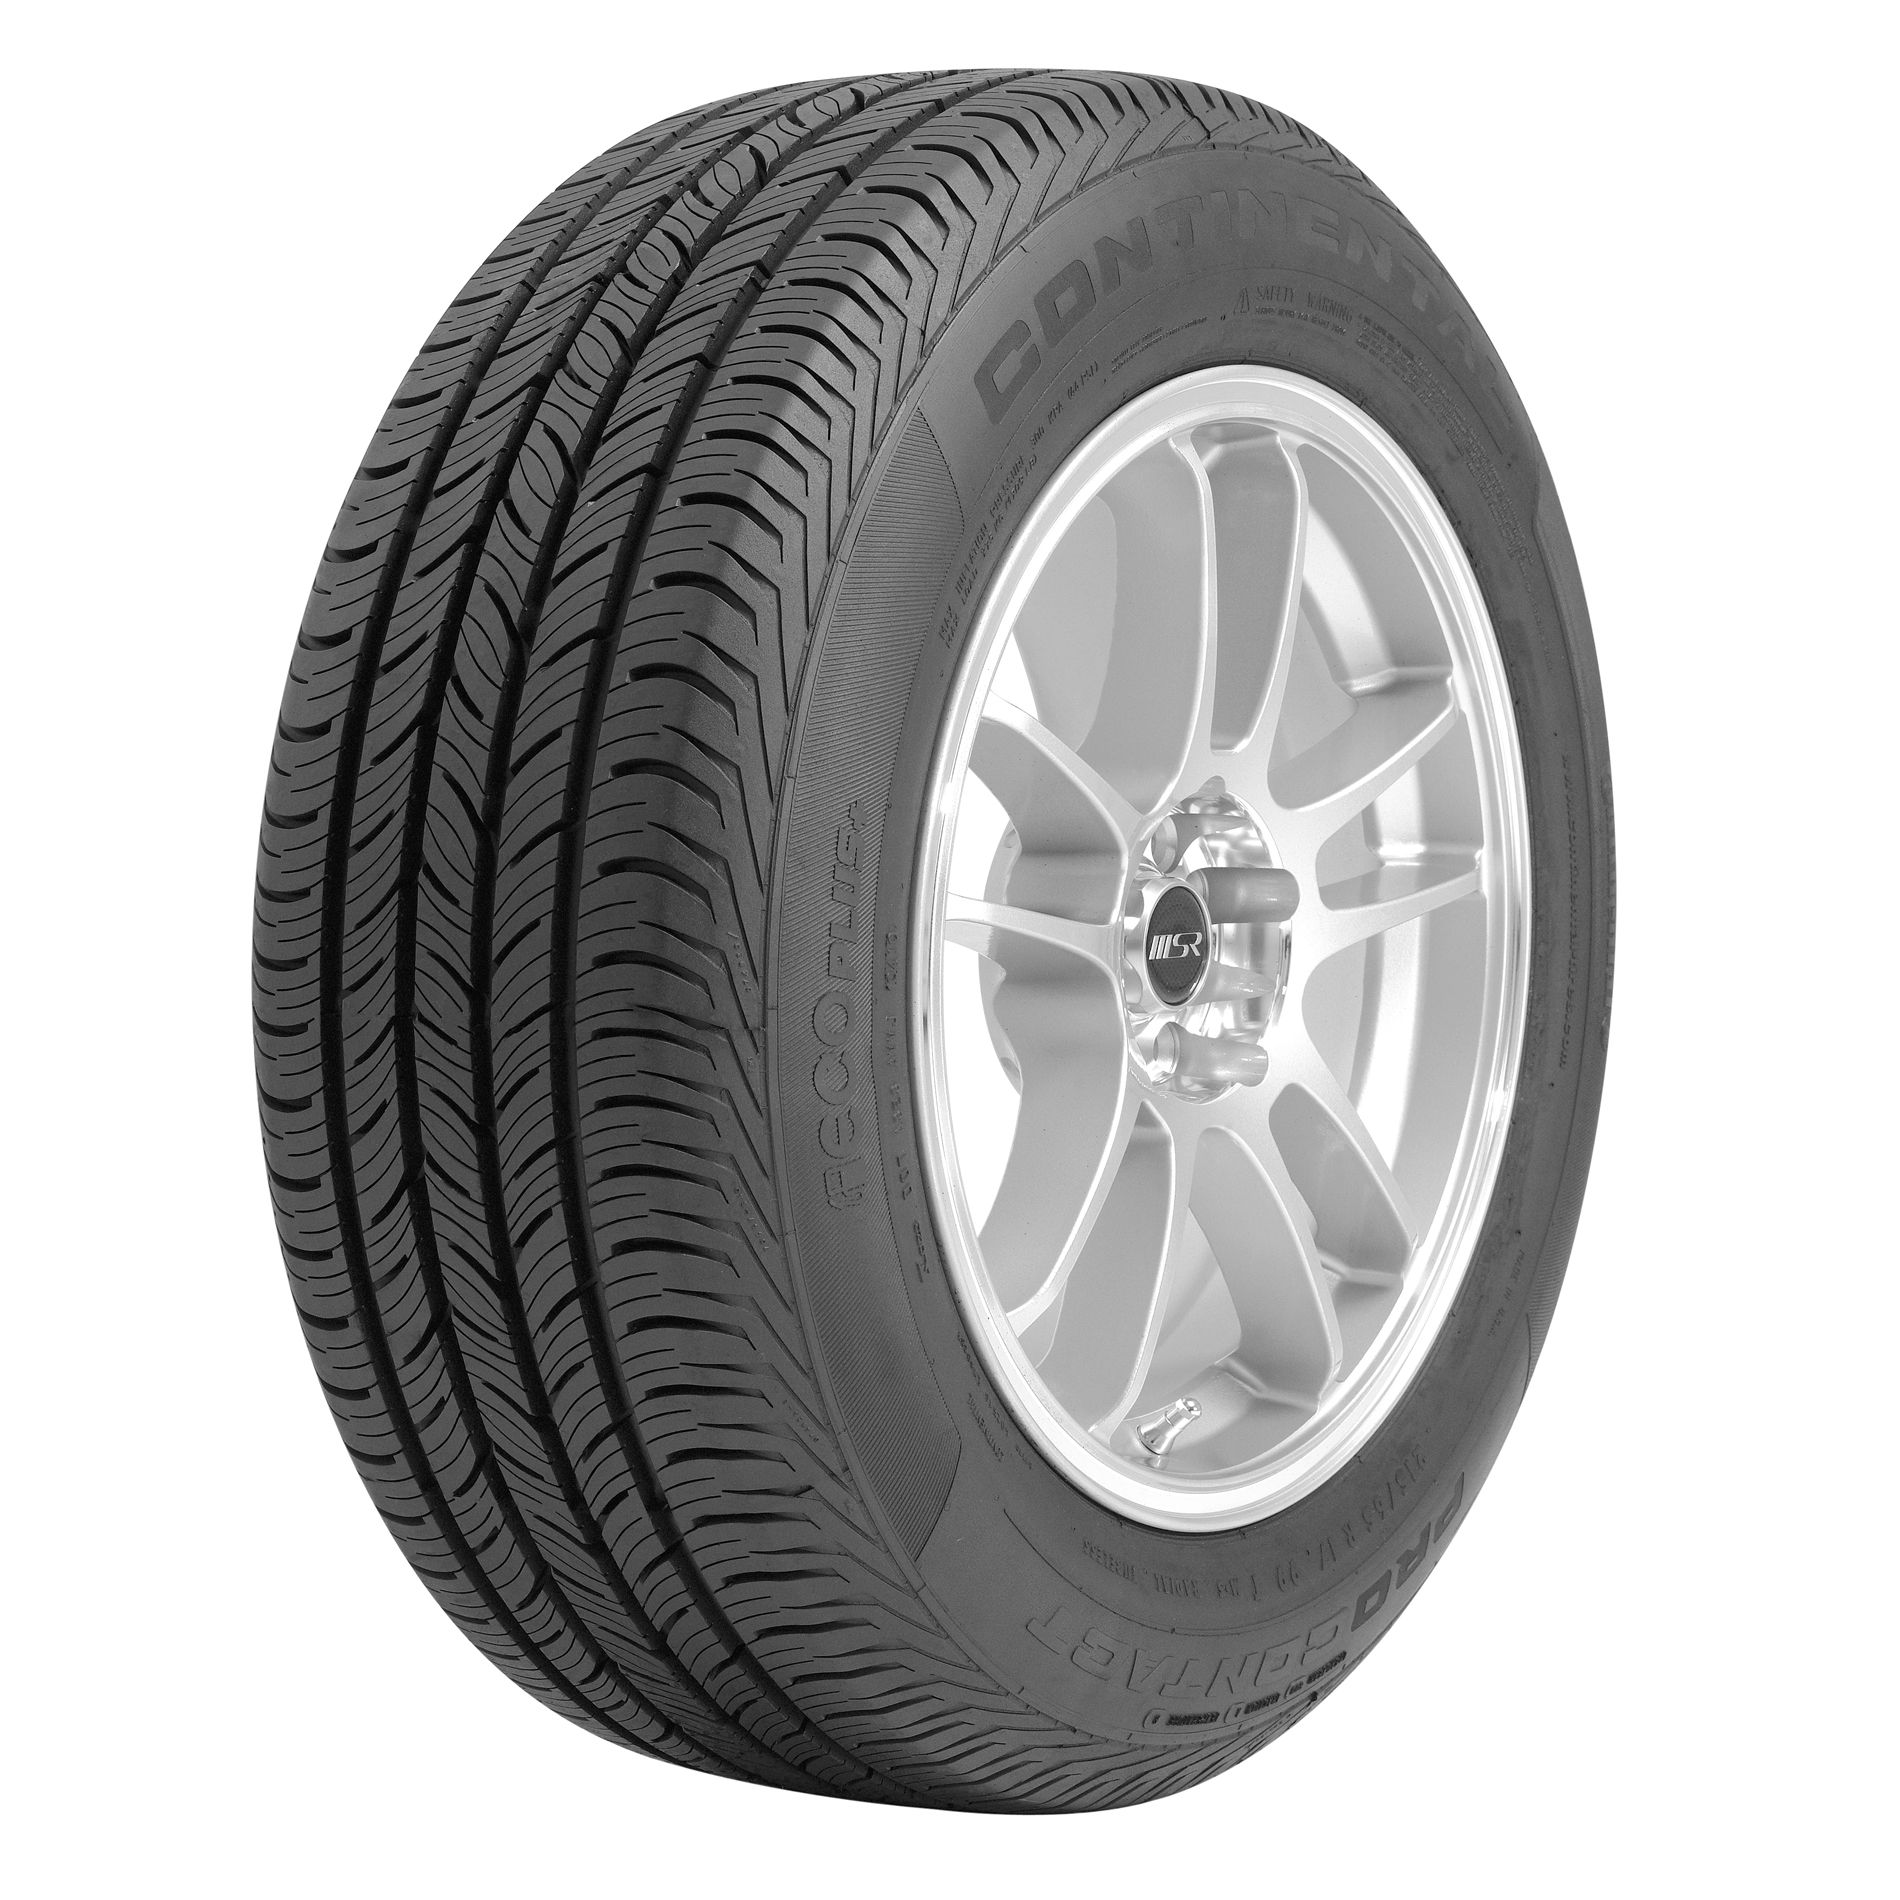 Continental Pro Contact Eco Plus - 225/60R16 98T BW - All-Season Tire